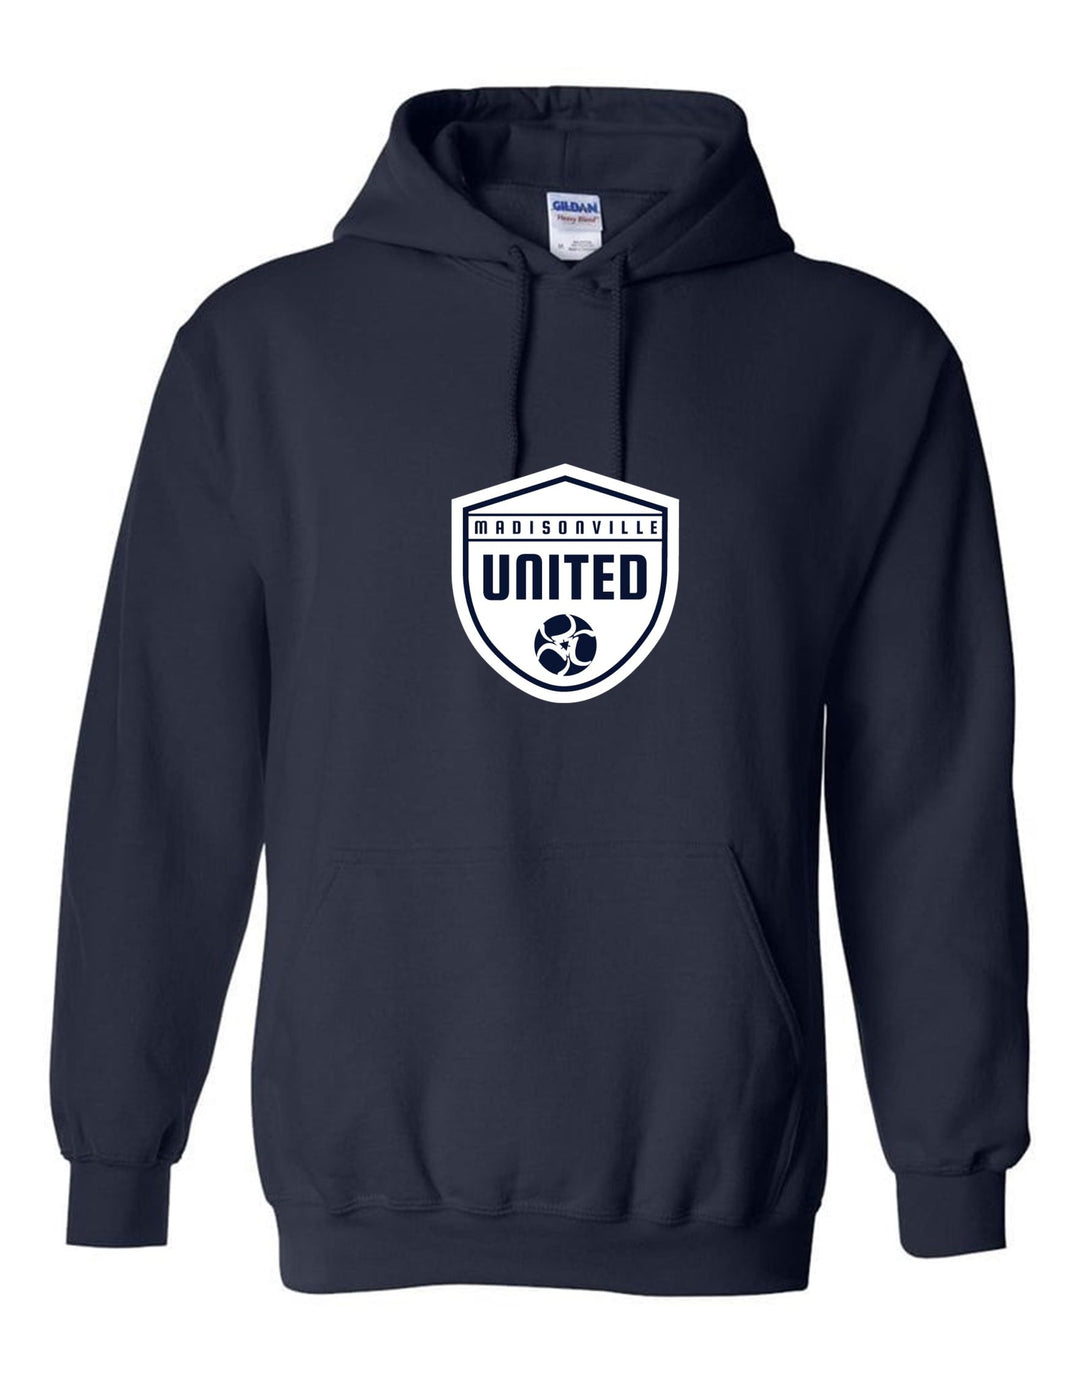 Madidsonville United Hoody - Black, Grey, Navy or White Madisonville United Spiritwear MENS SMALL BLACK - Third Coast Soccer